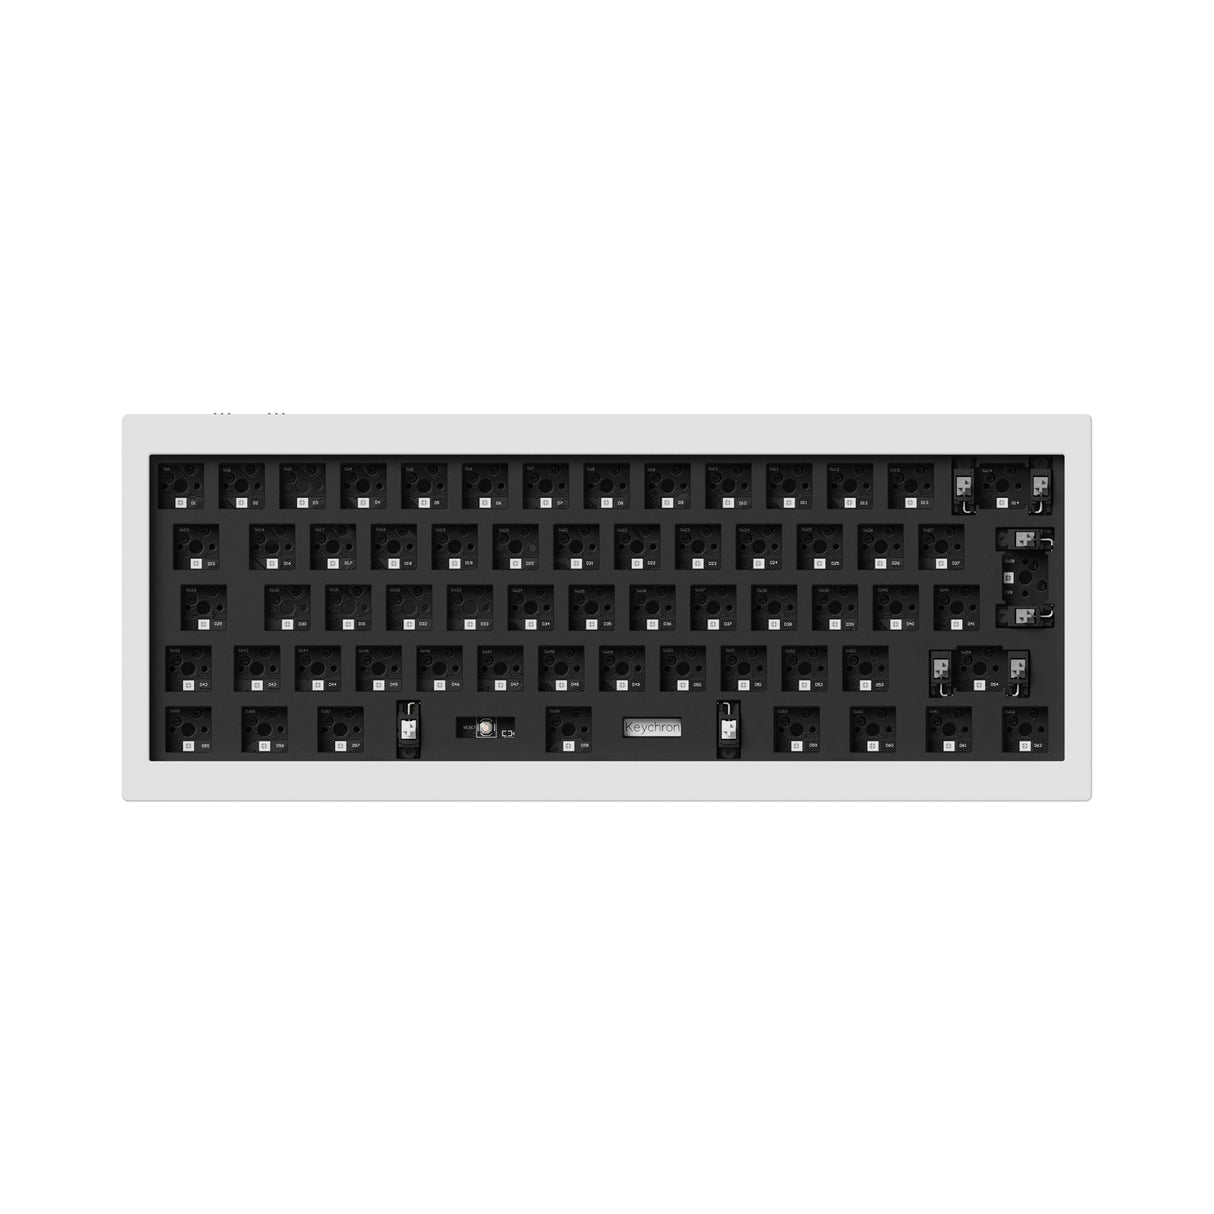 Keychron Q4 Pro QMK/VIA wireless custom mechanical keyboard 60 percent layout full aluminum white frame for Mac WIndows Linux with RGB backlight and hot-swappable barebone ISO